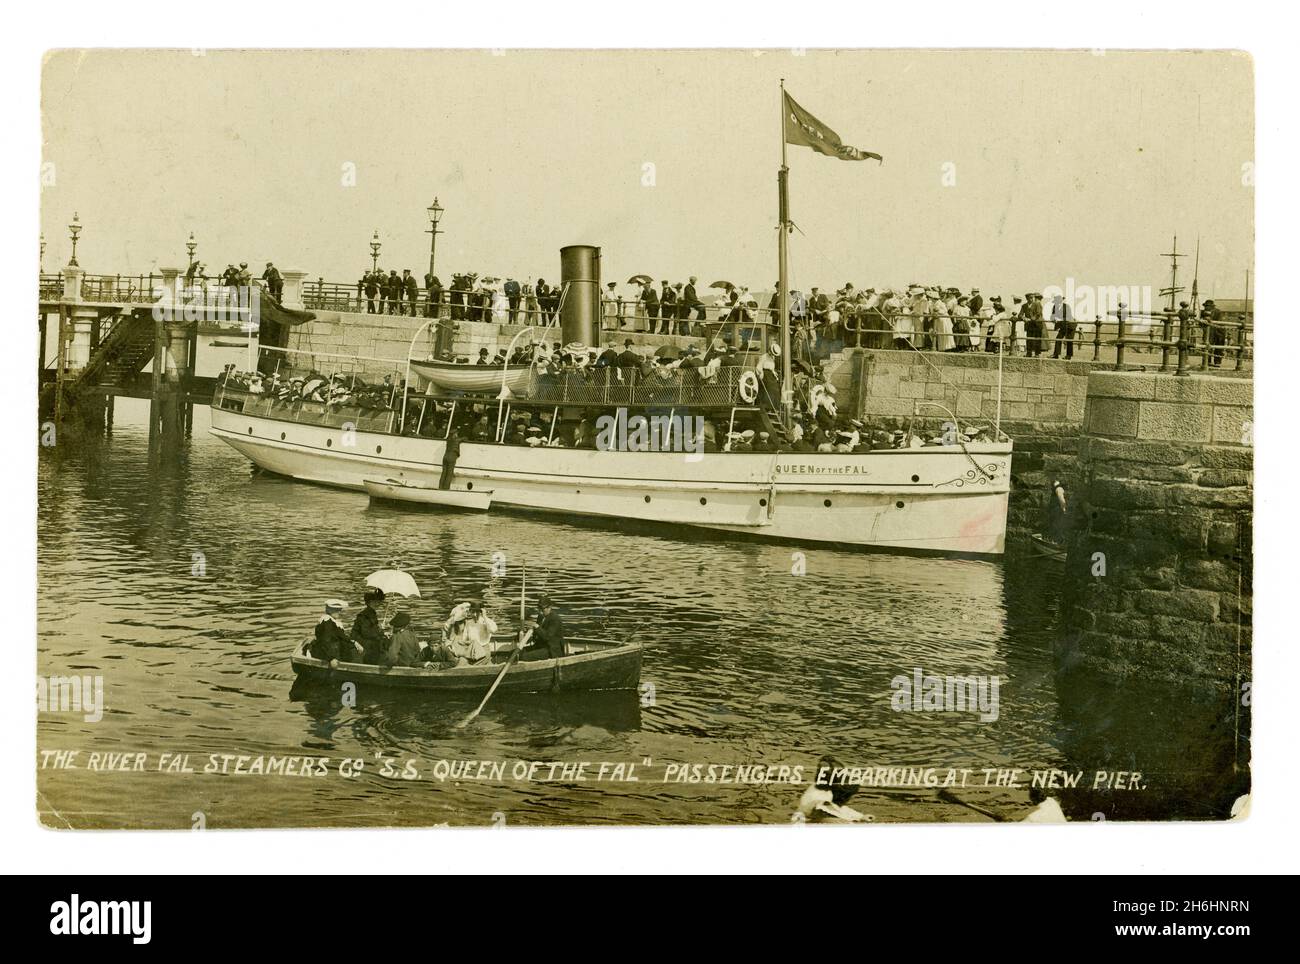 Postkarte des River Fal Steamers Co. SS Queen of the Fal, Passagiere, die am neuen Pier (Prince of Wales Pier) einschiffen, veröffentlicht am 9. Oktober 1906 Stockfoto